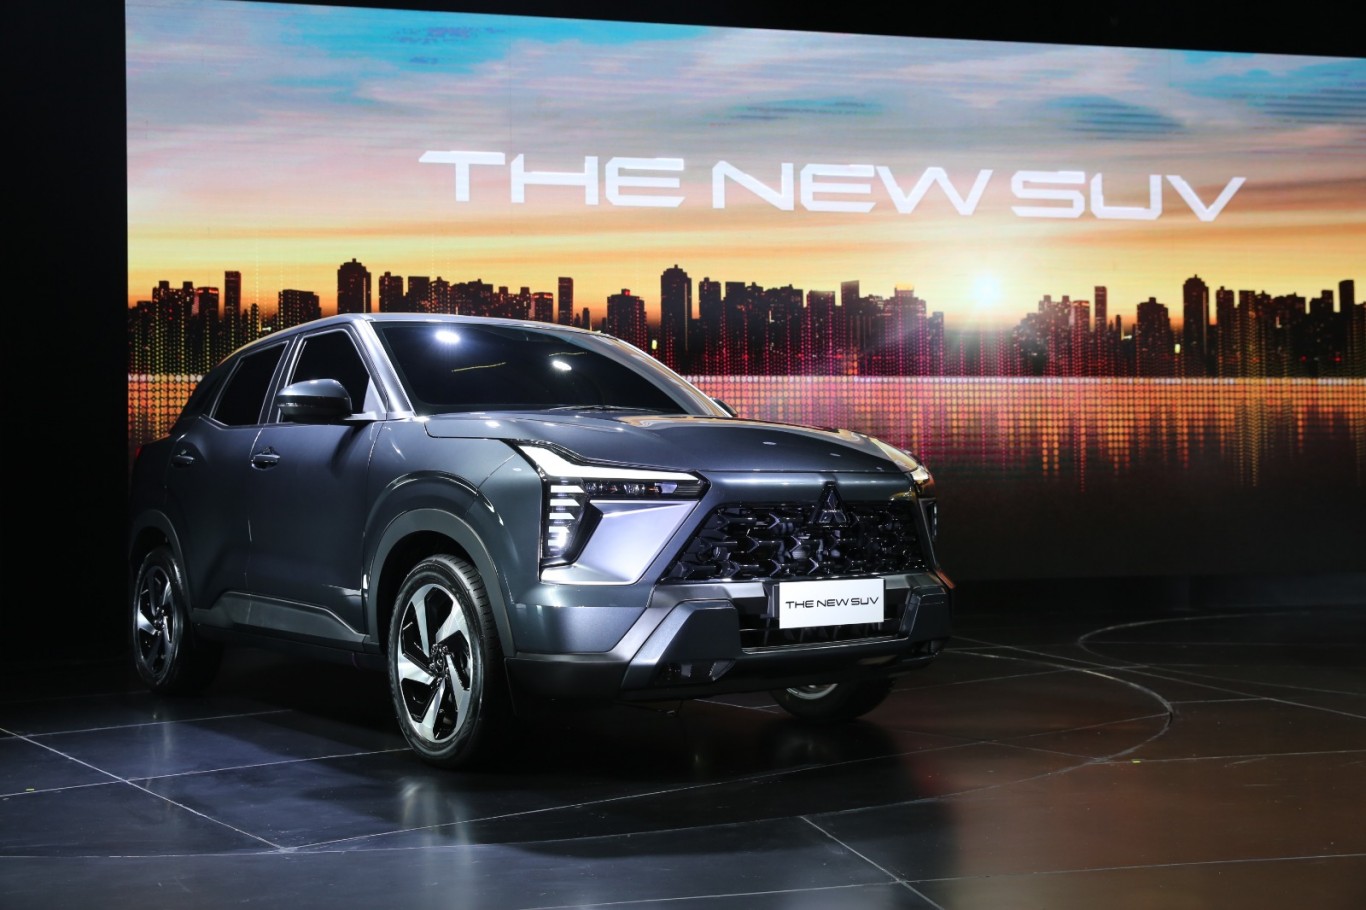 Mitsubishi Motors Mengungkap Desain Exterior Model The New SUV 4